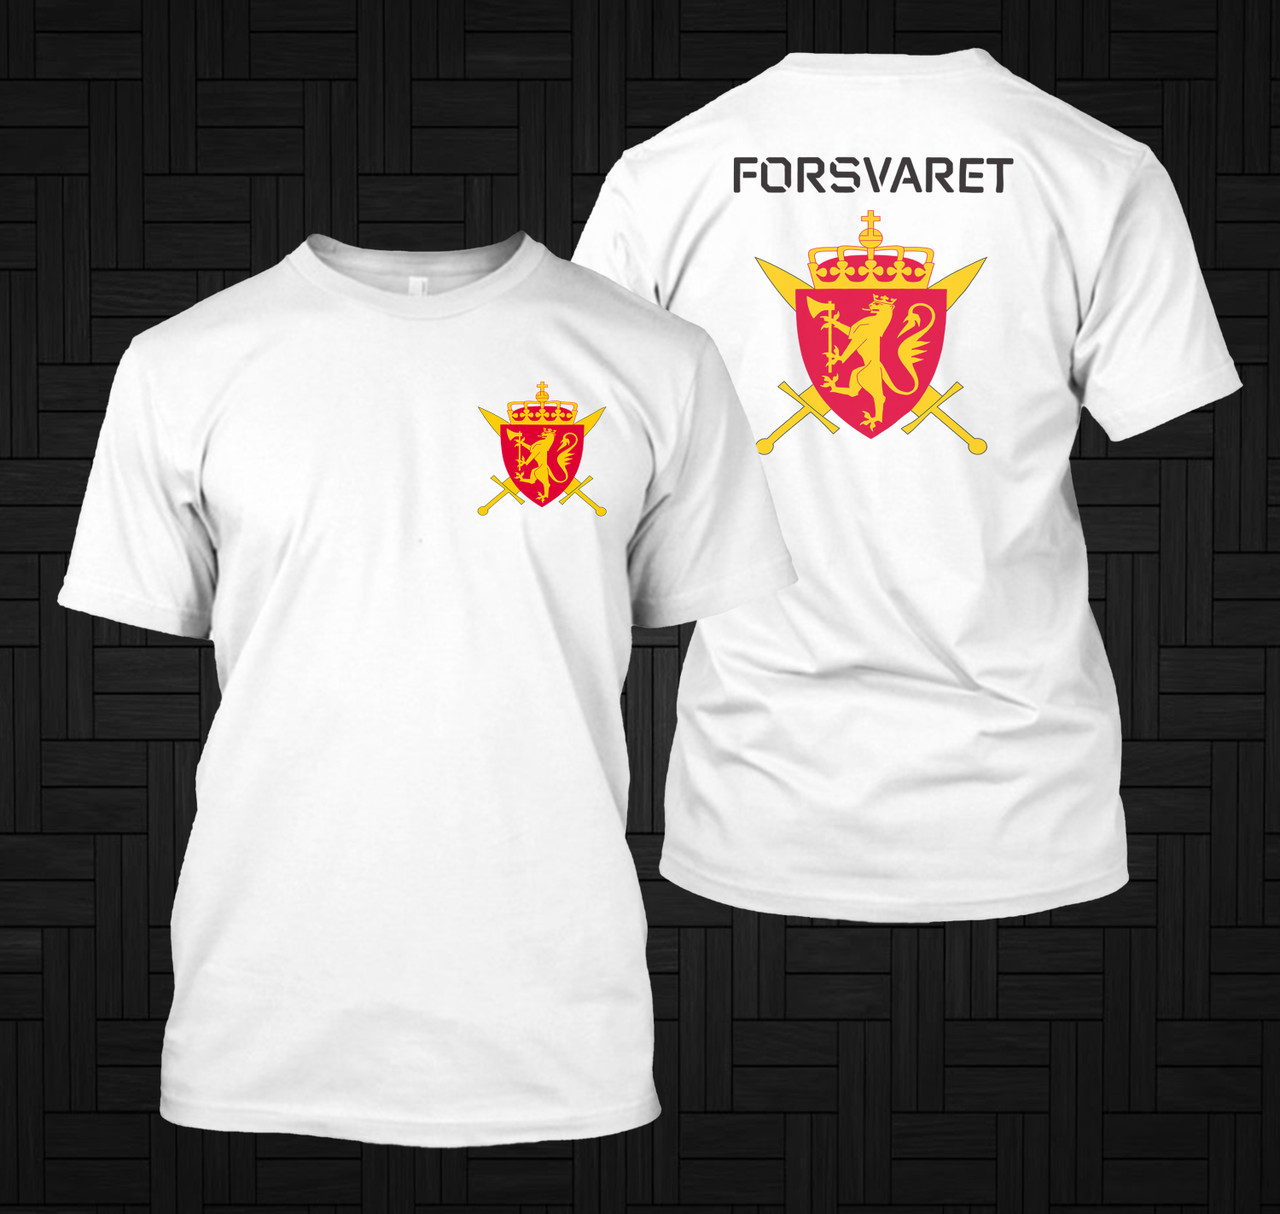 Forsvarets Shirt, Norwegian Army Shirt Dejavain